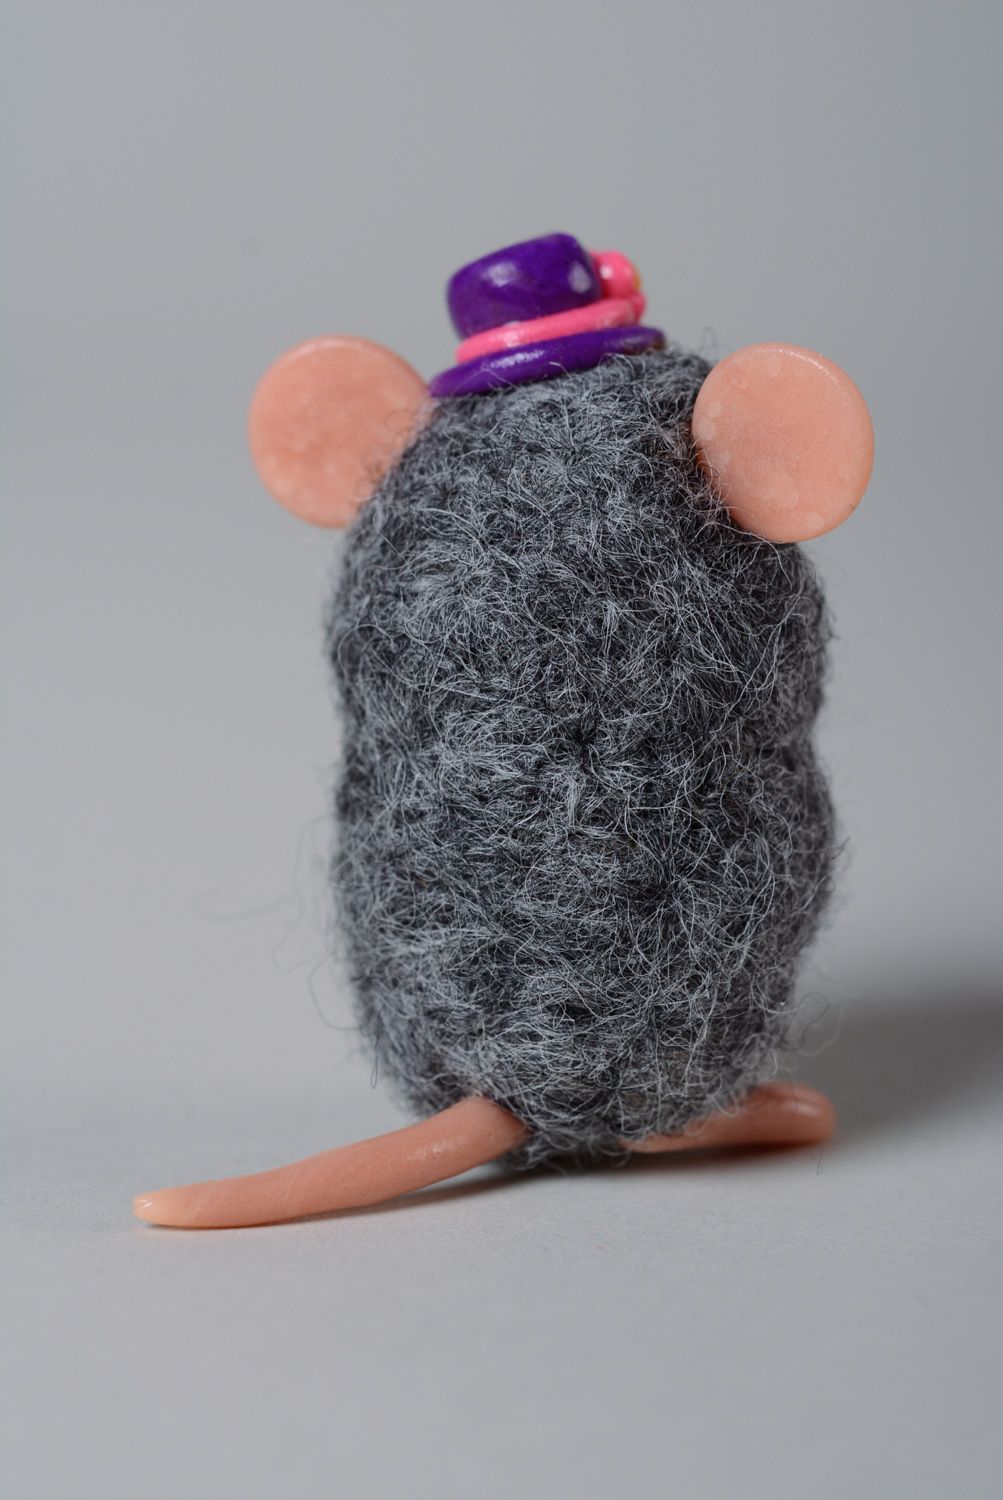 Miniatur Kuscheltier Maus in Trockenfilzen Technik foto 3